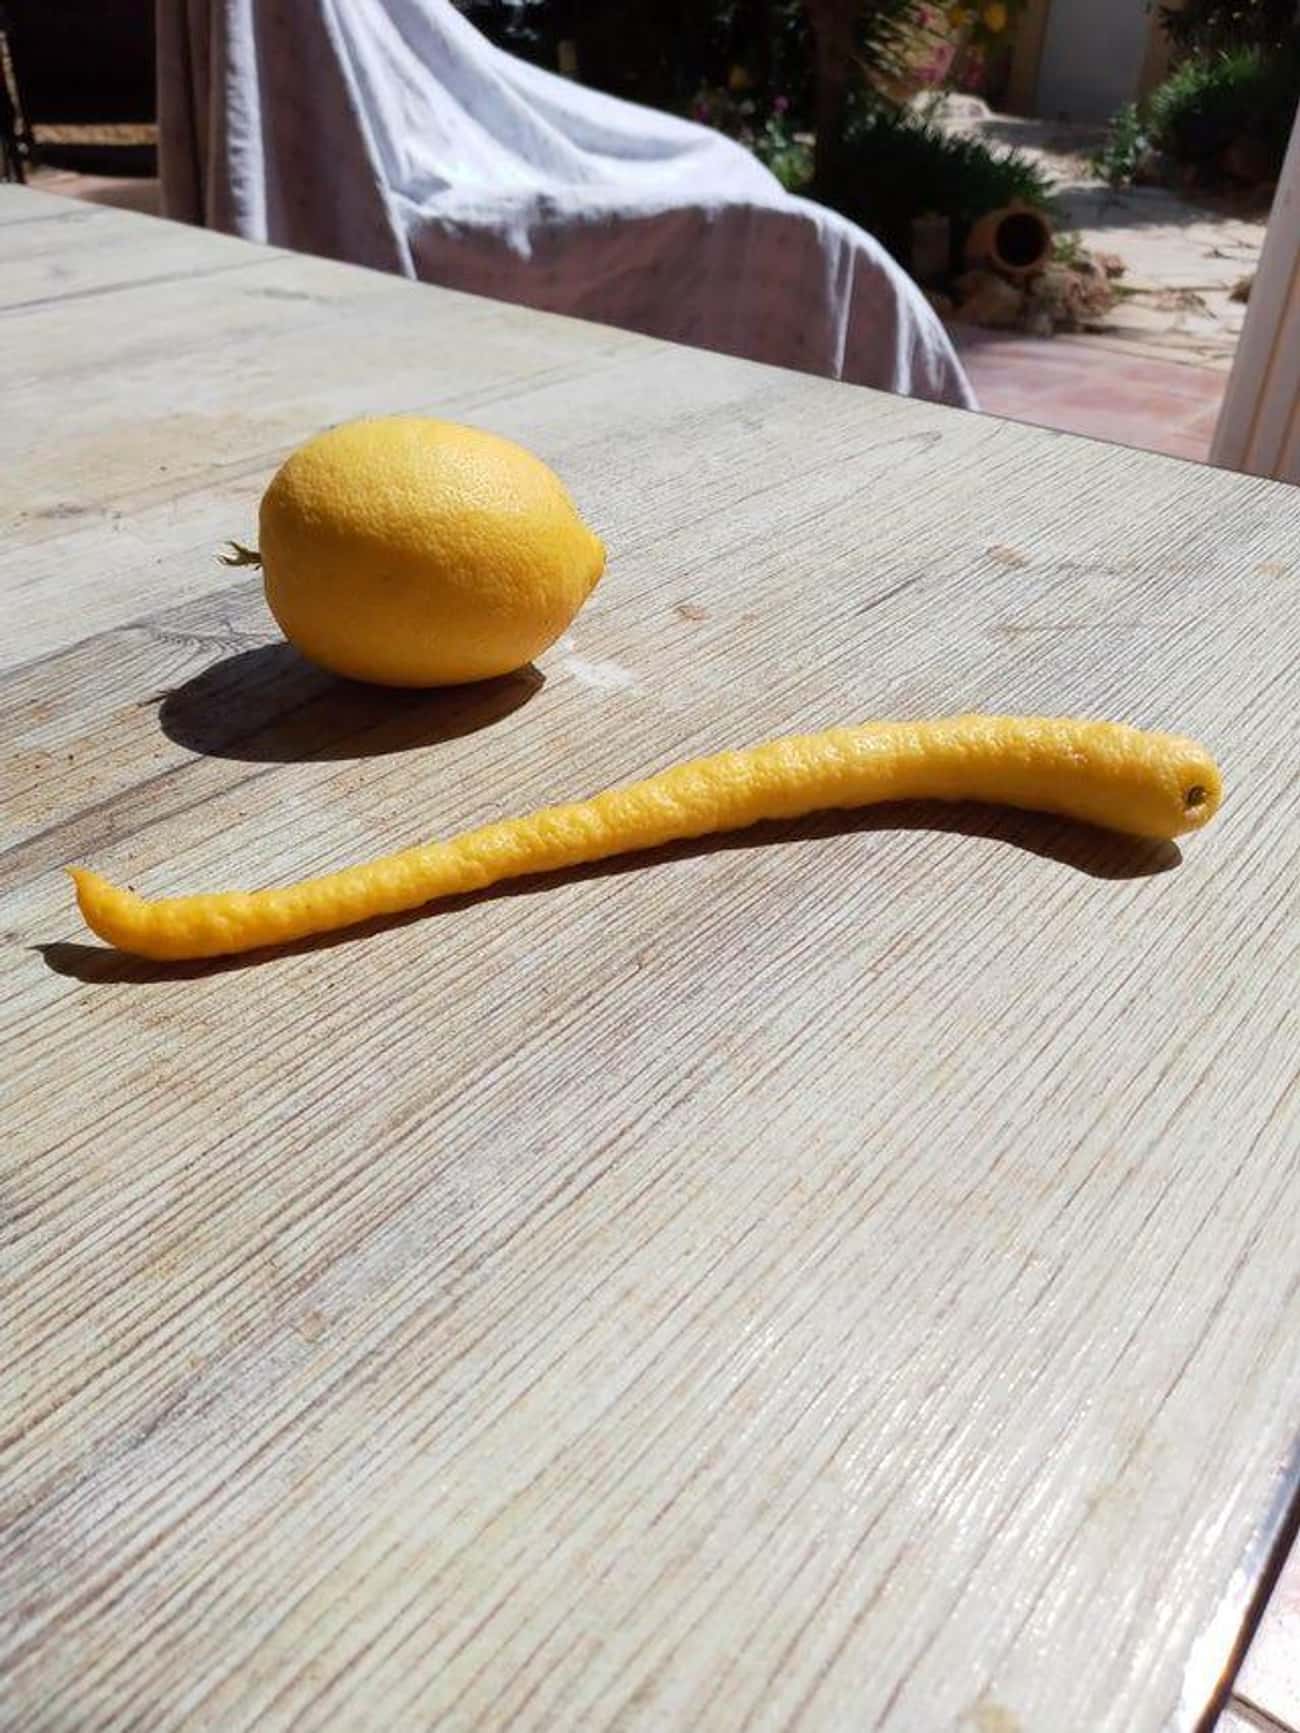 A Strange Lemon